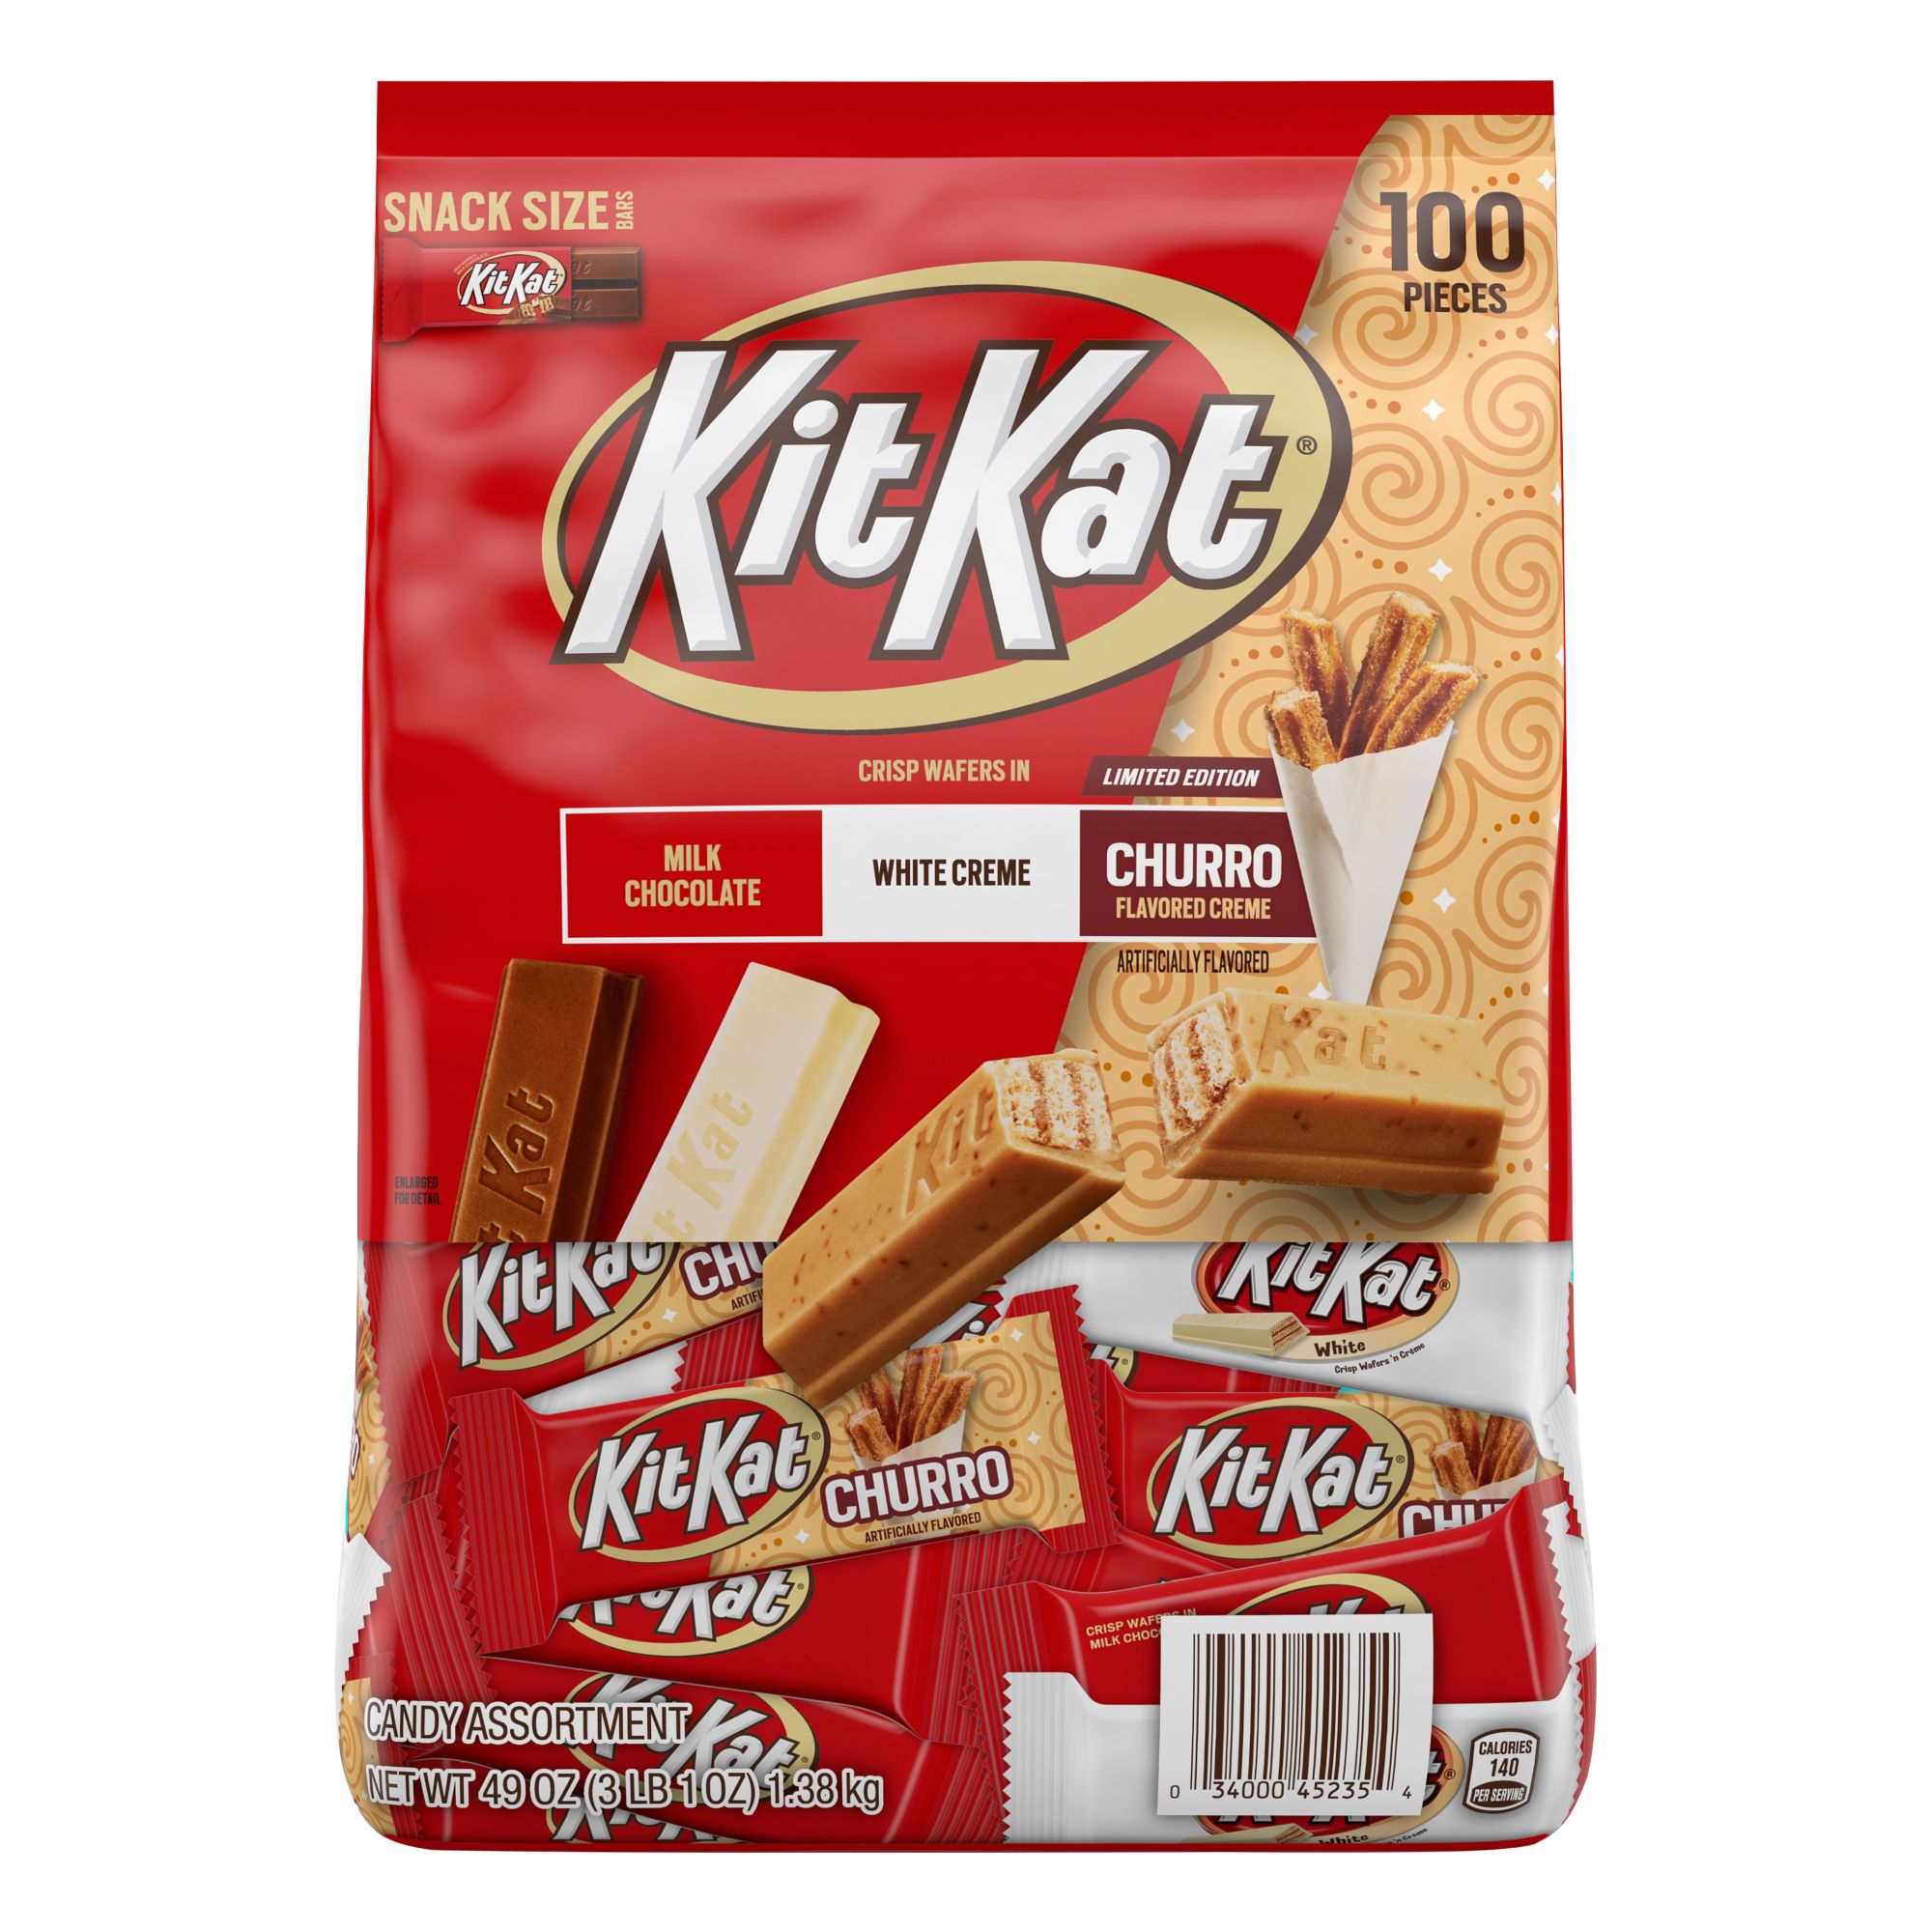 Kit Kat King Size Candy Bar - 24 /Box - Candy Favorites